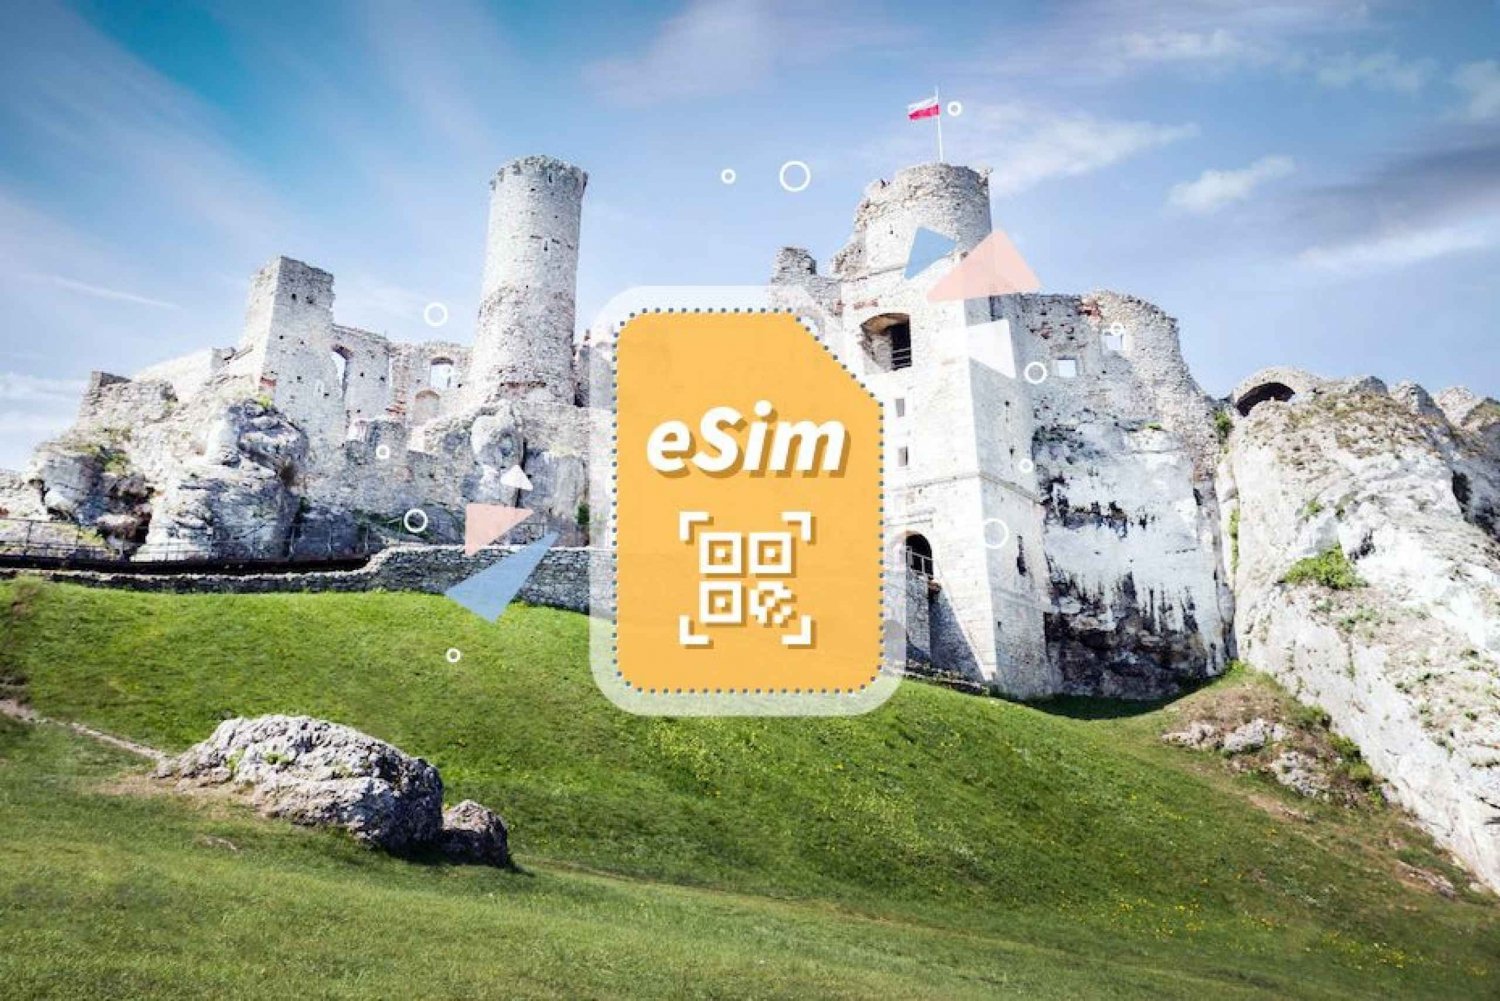 Polska/Europa: Mobilny plan transmisji danych 5G eSim